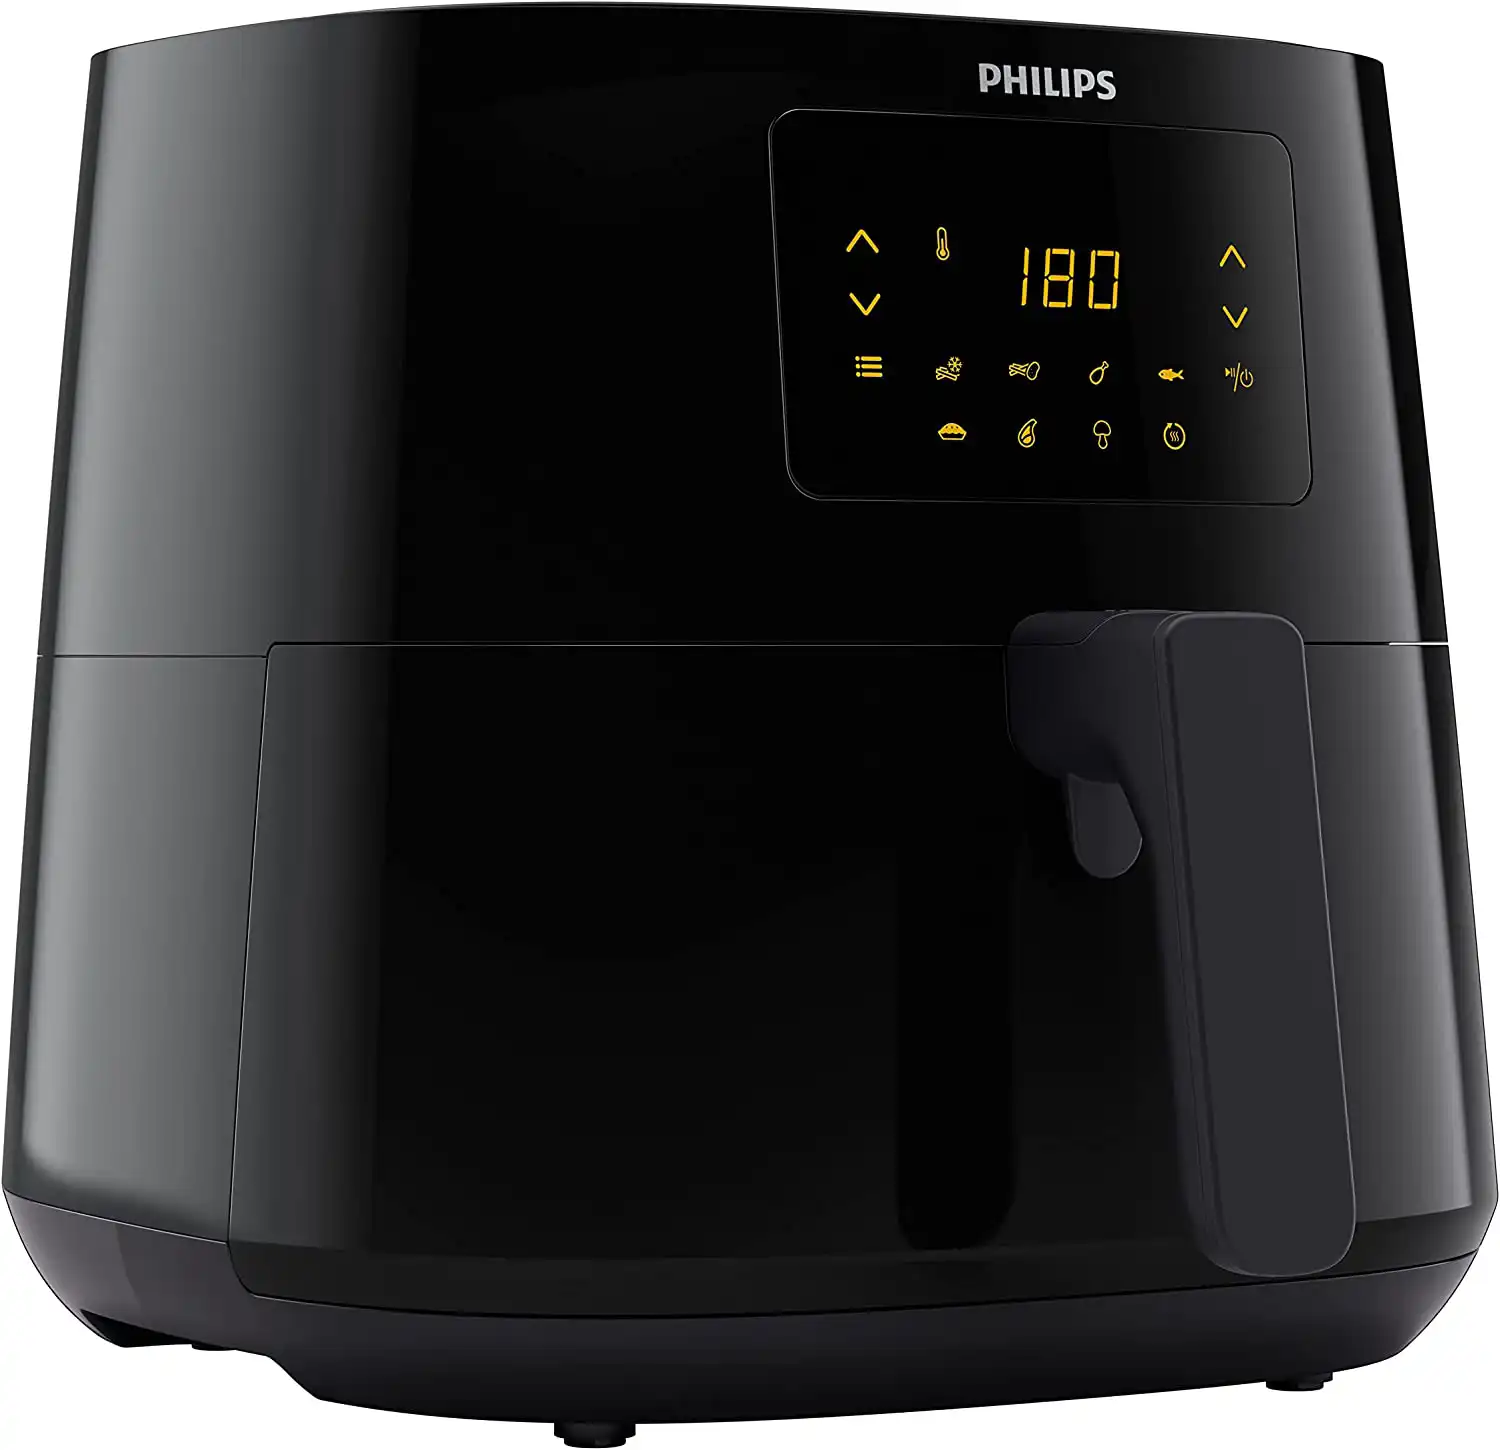 Philips Air Fryer Without Oil, 2000 Watt, 6 Liters, Digital Display, Black, HD9270, Raya Warranty